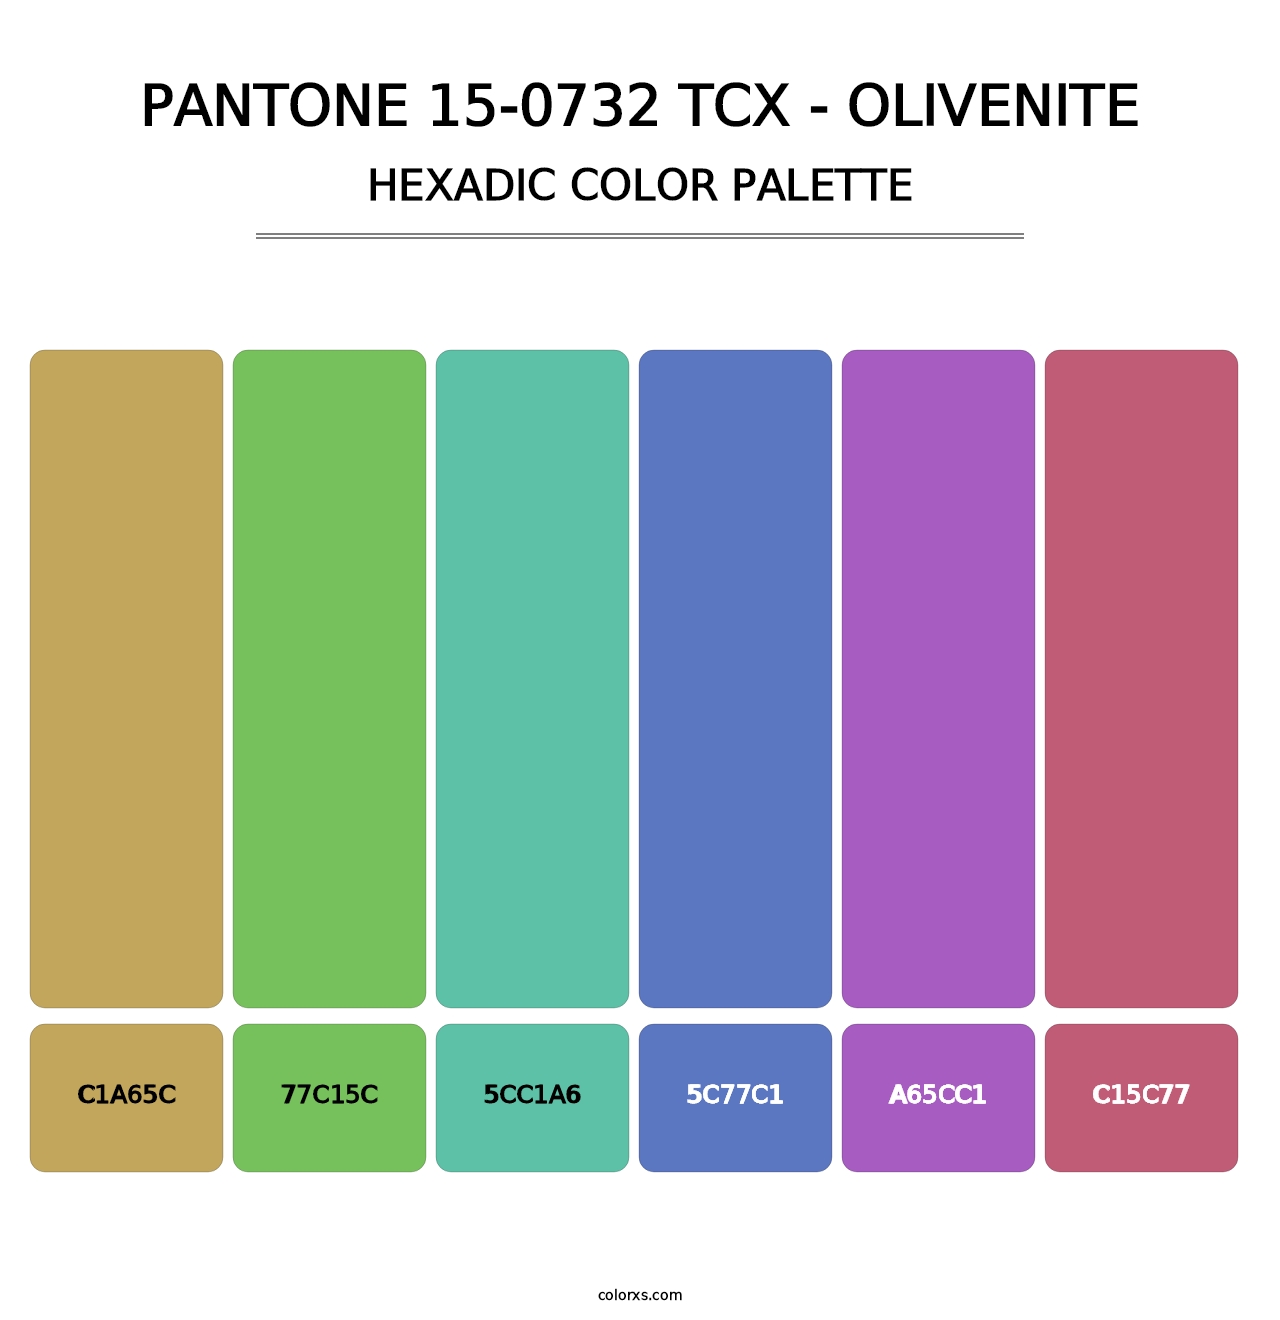 PANTONE 15-0732 TCX - Olivenite - Hexadic Color Palette